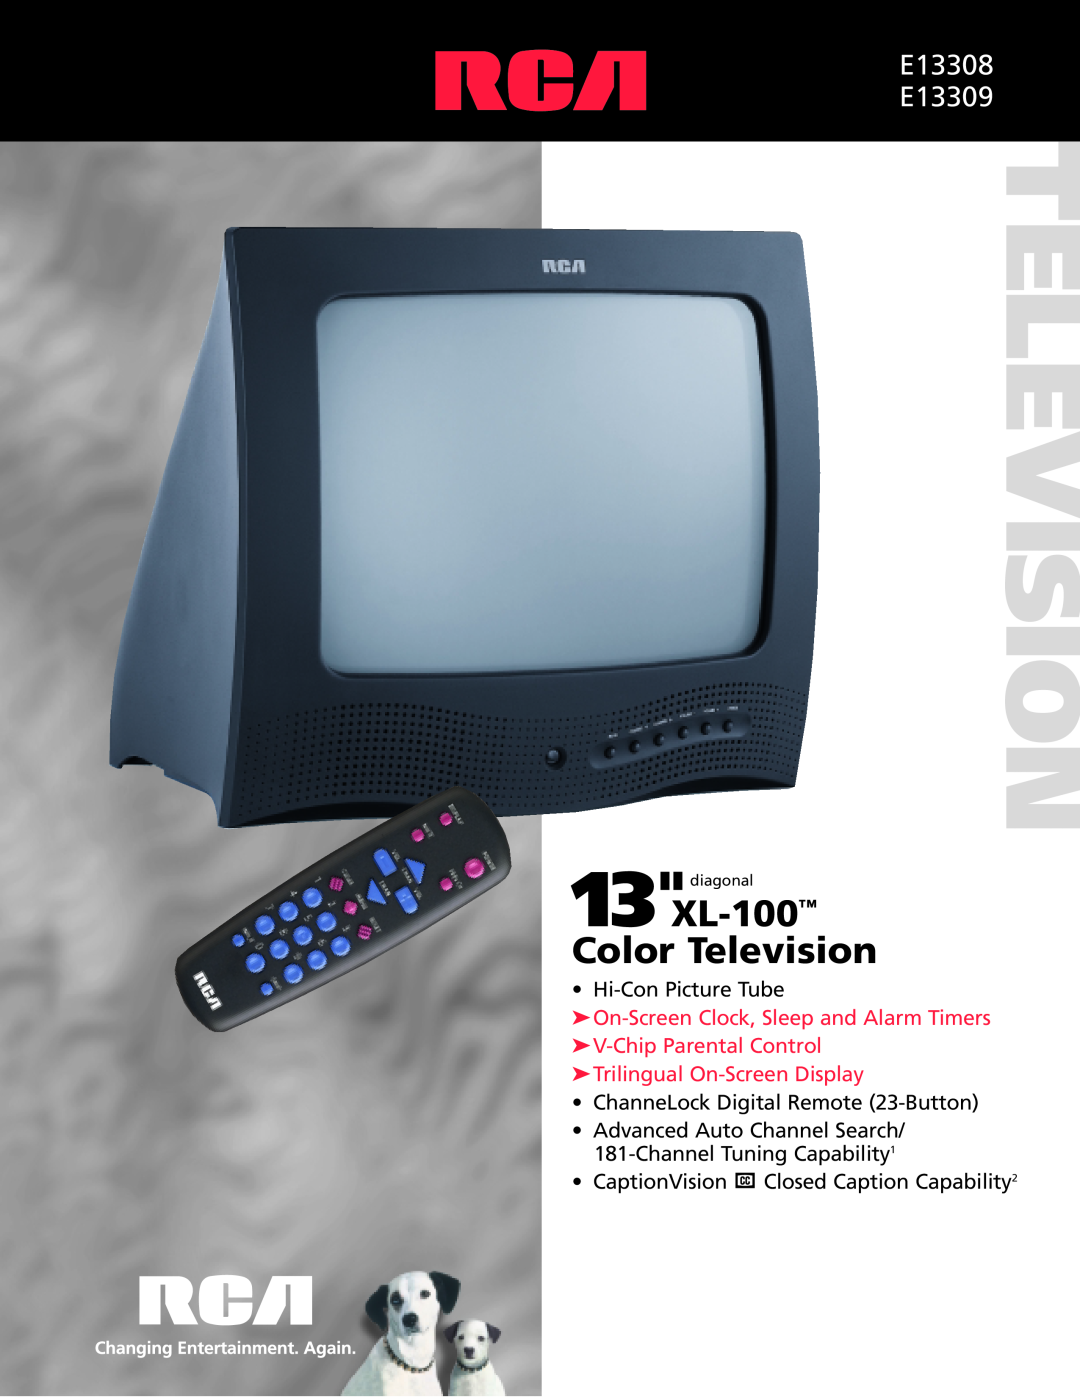 RCA manual XL-100 Color Television, E13308 E13309, Hi-Con Picture Tube, Trilingual On-Screen Display, 13diagonal 